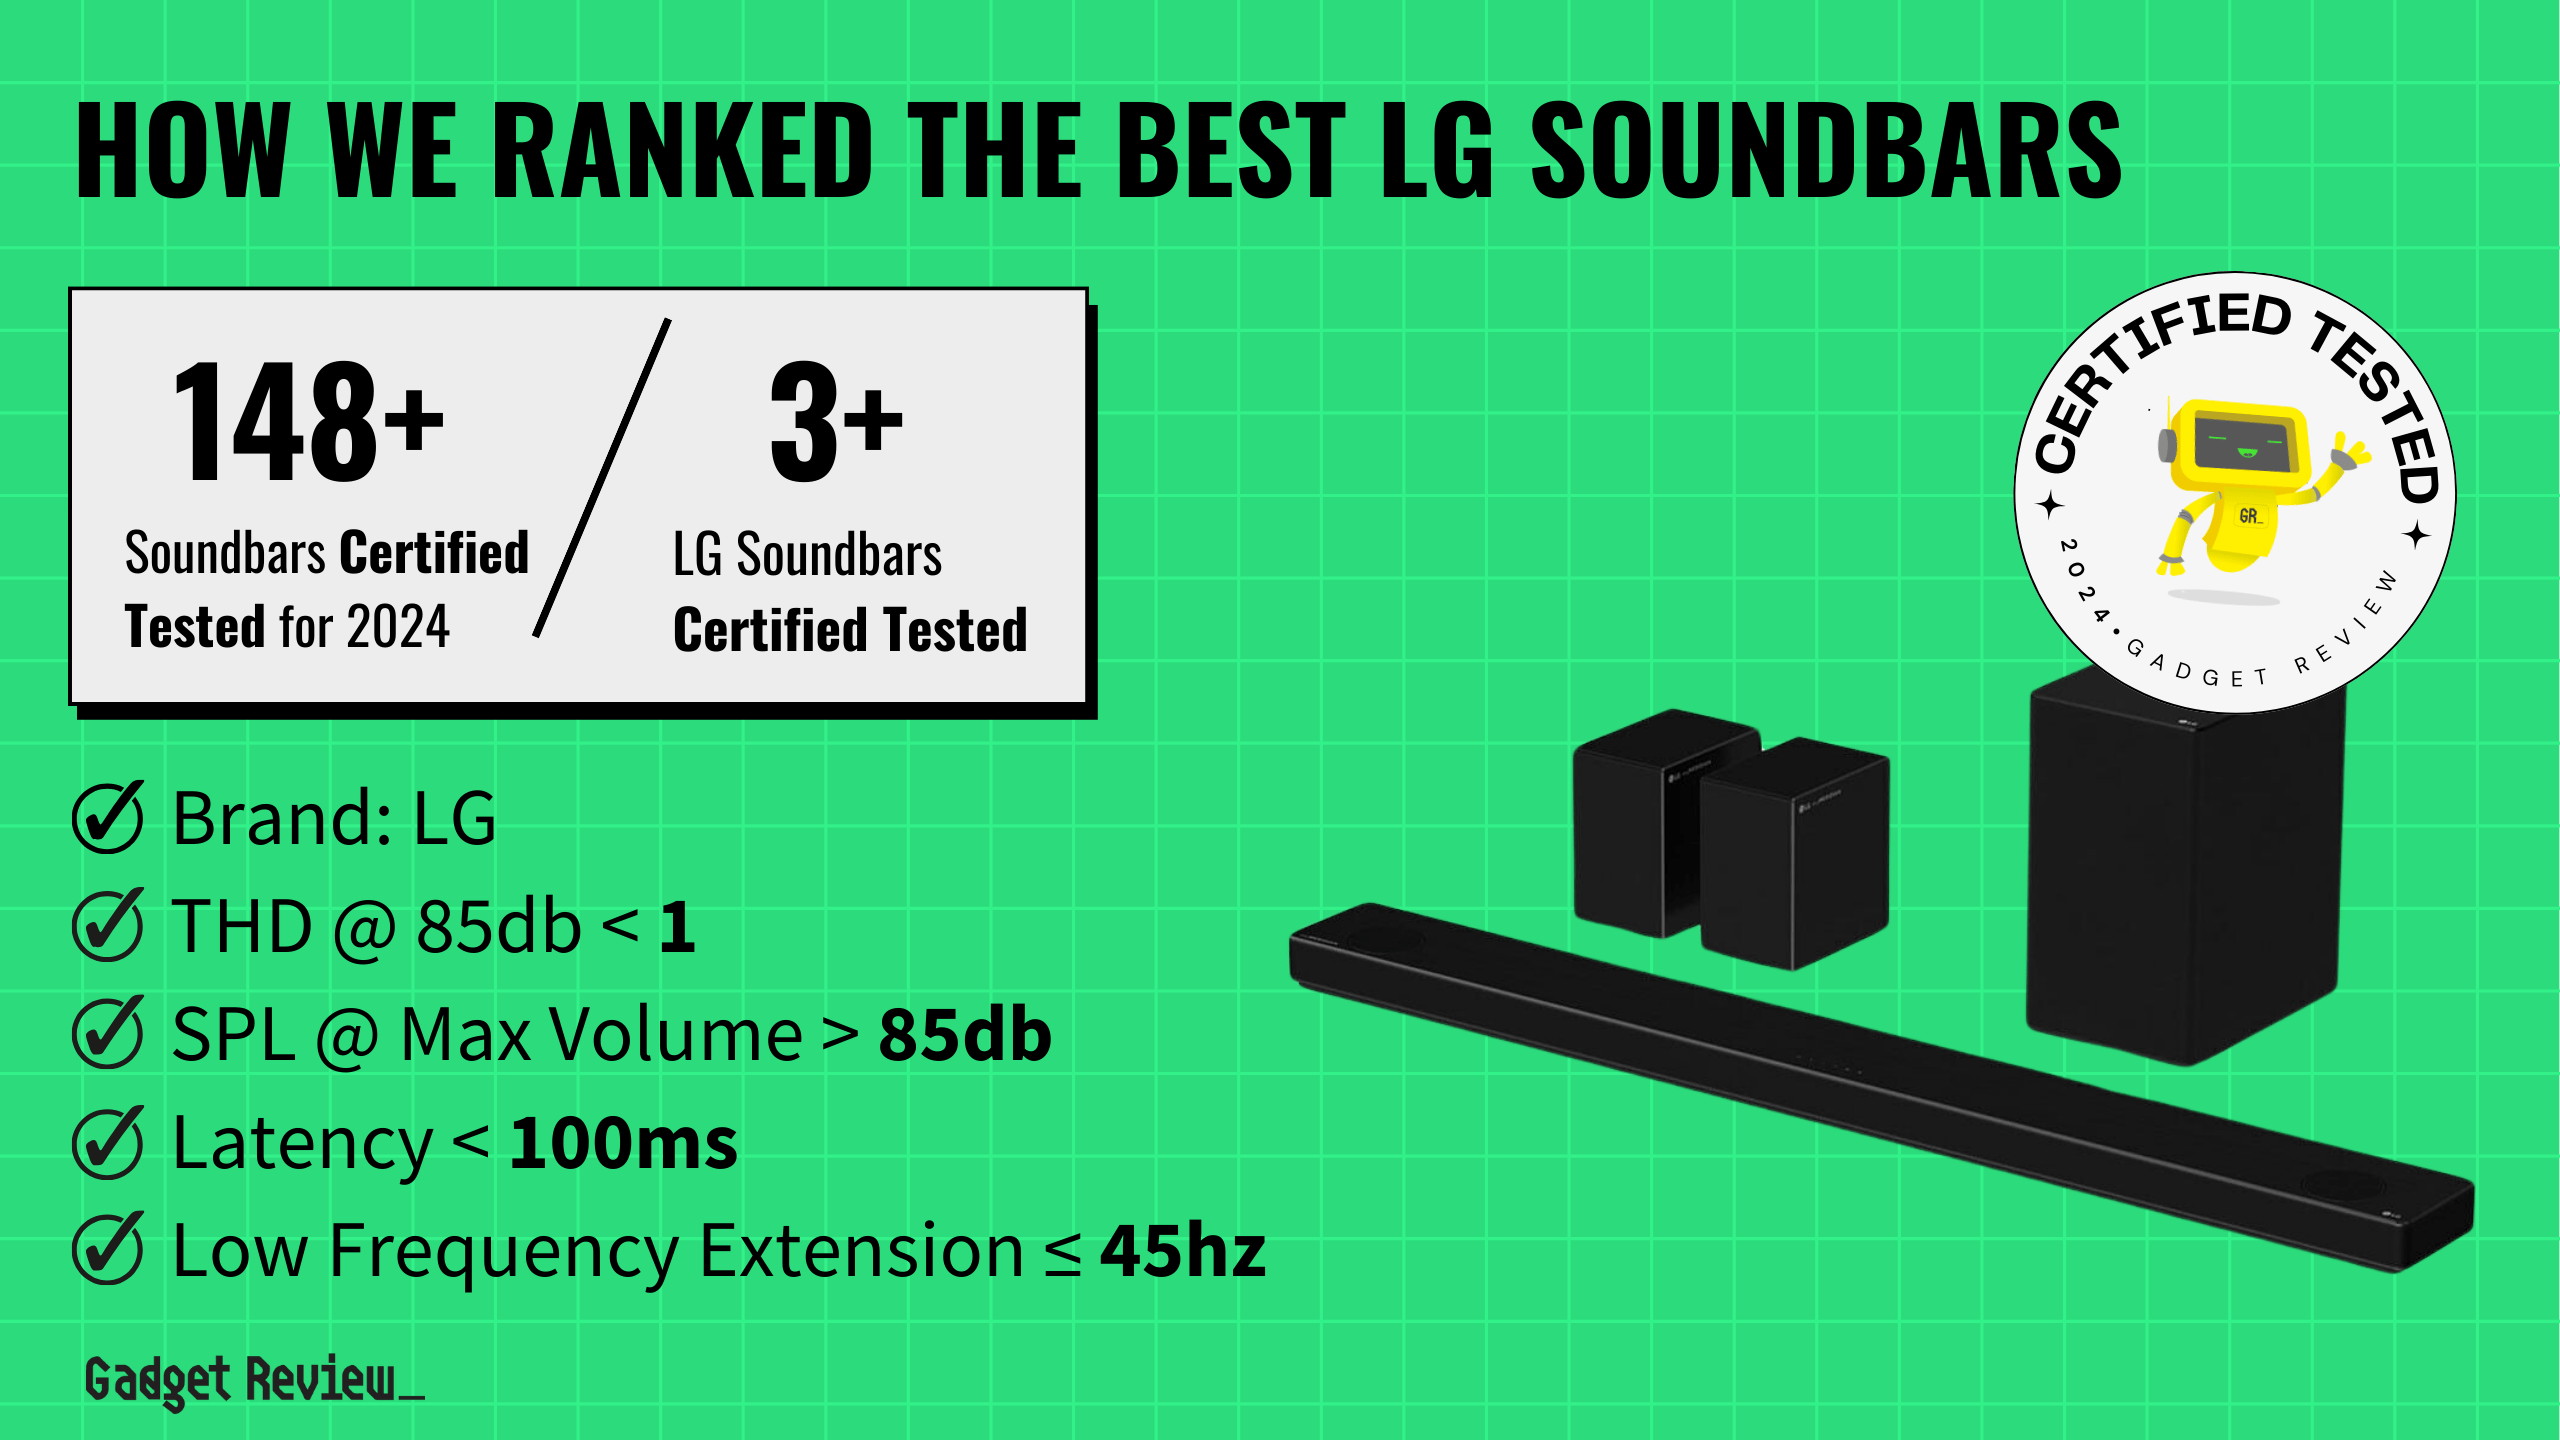 best lg sound bar guide that shows the top best soundbar model